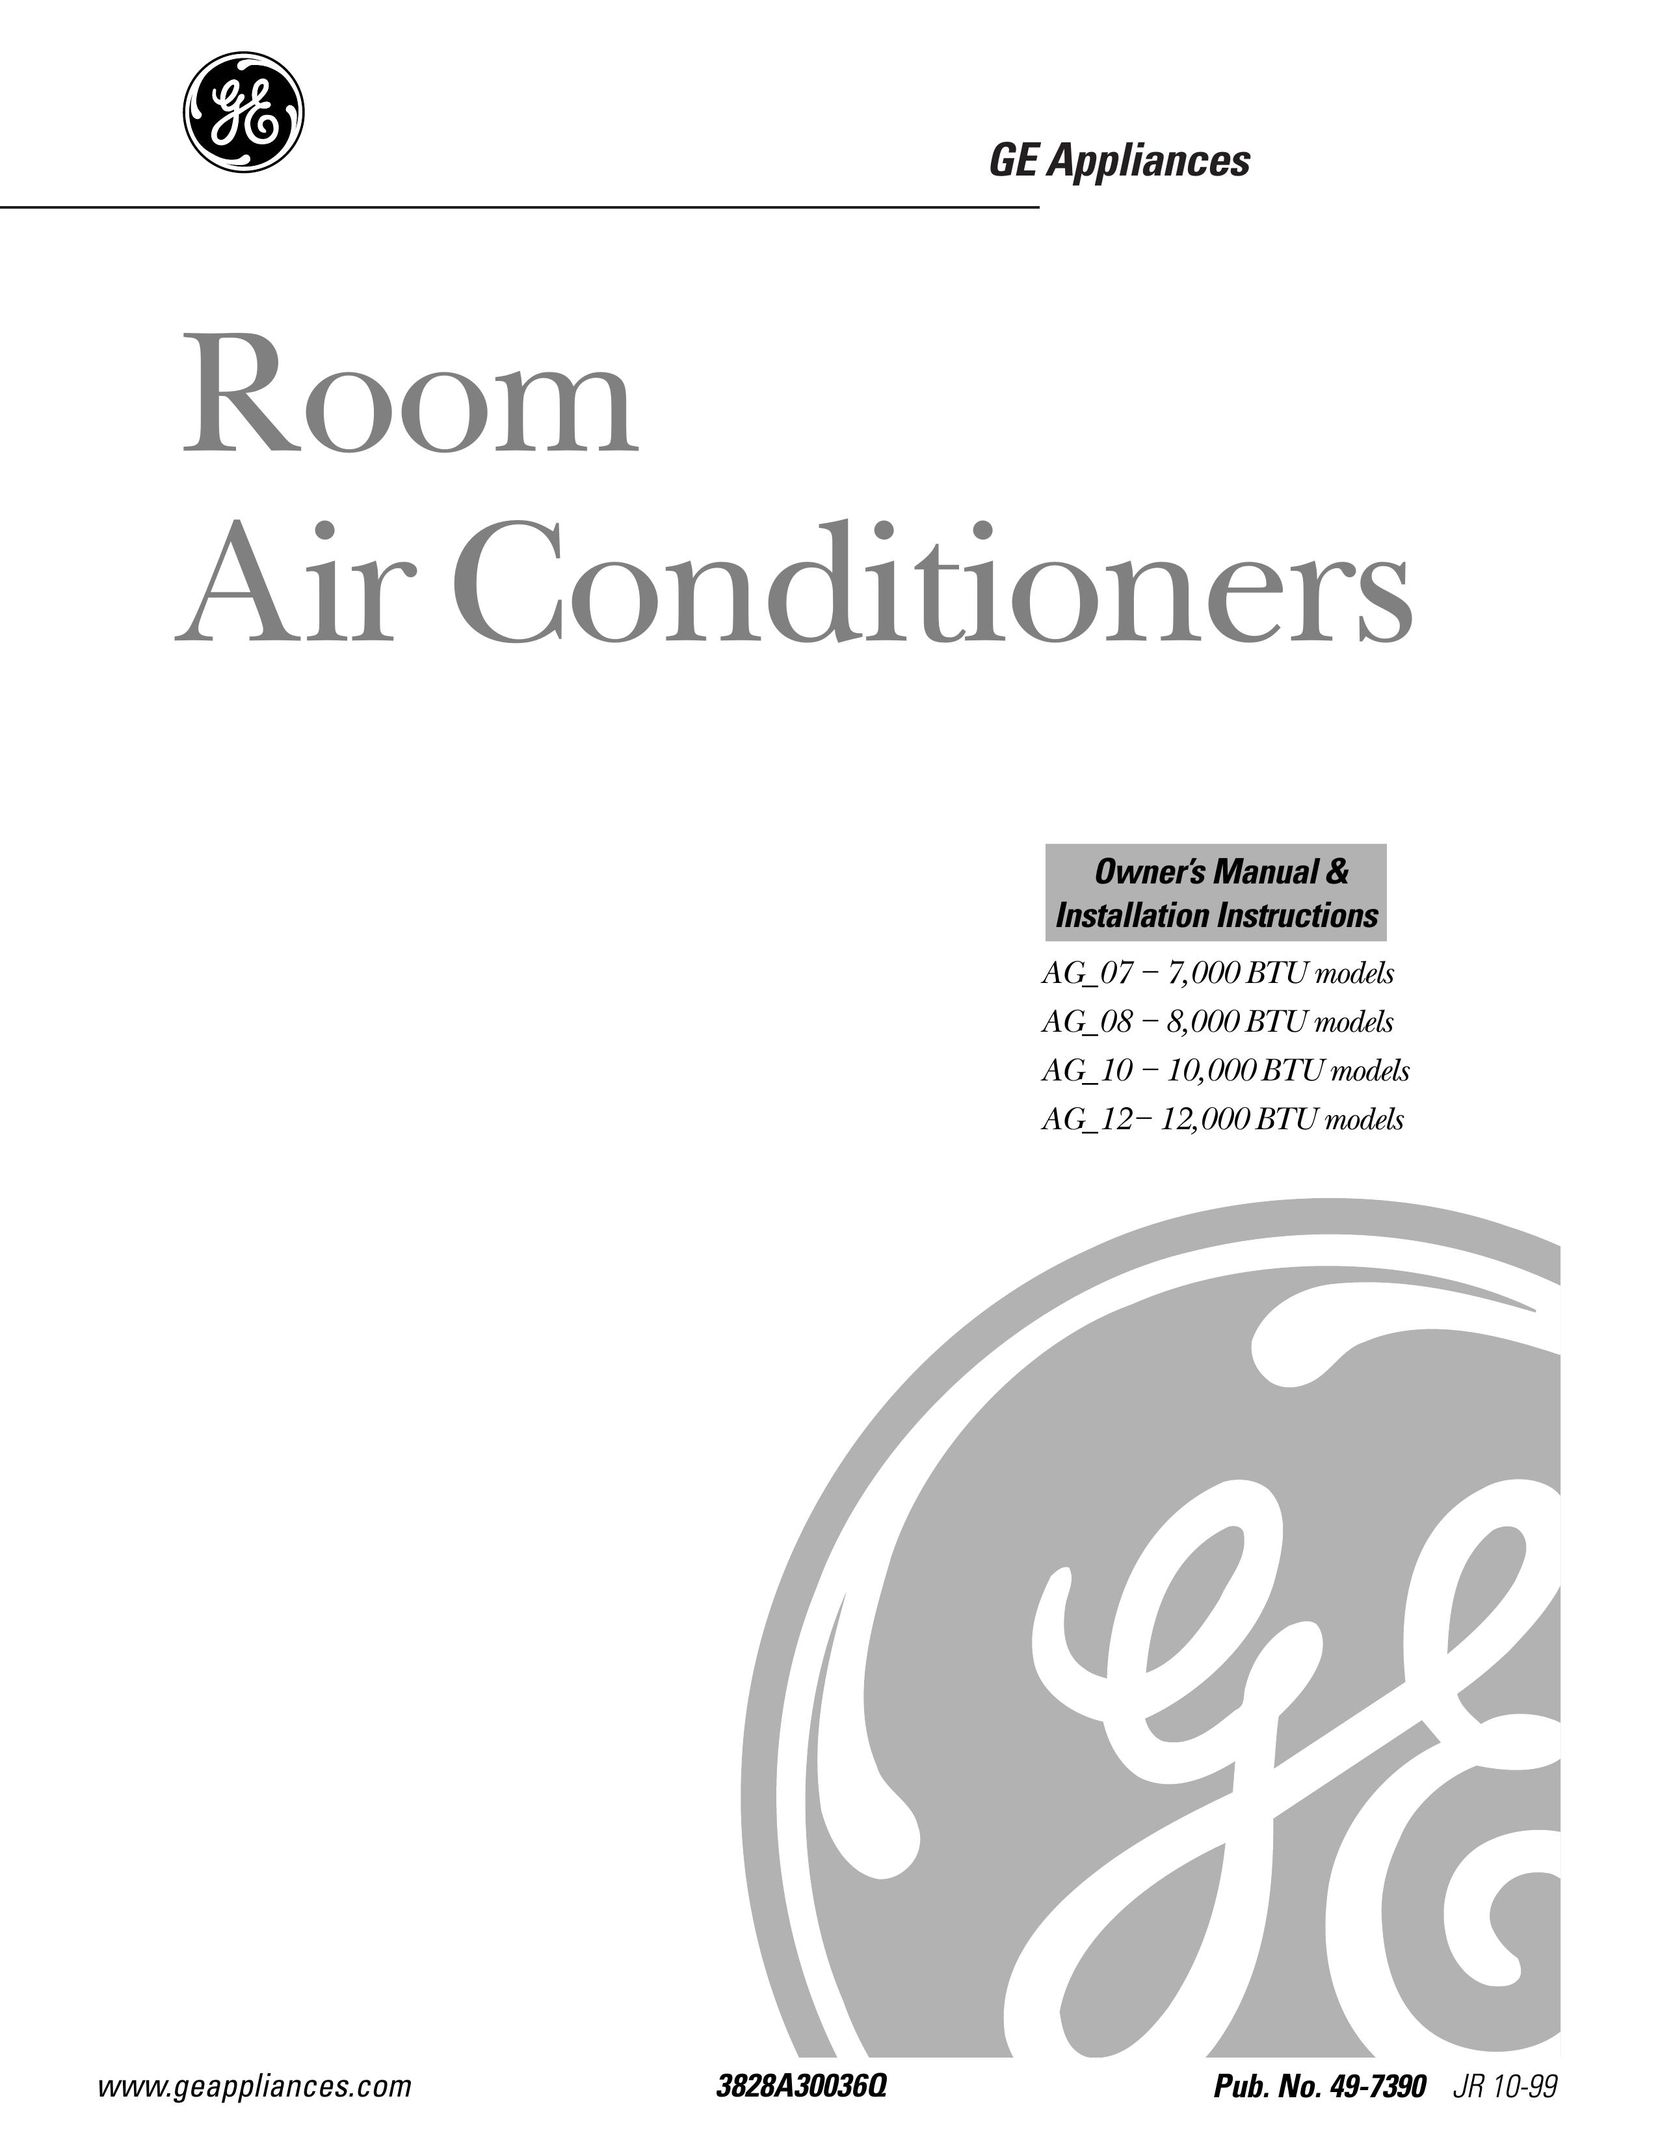 GE 000 BTU models Air Conditioner User Manual